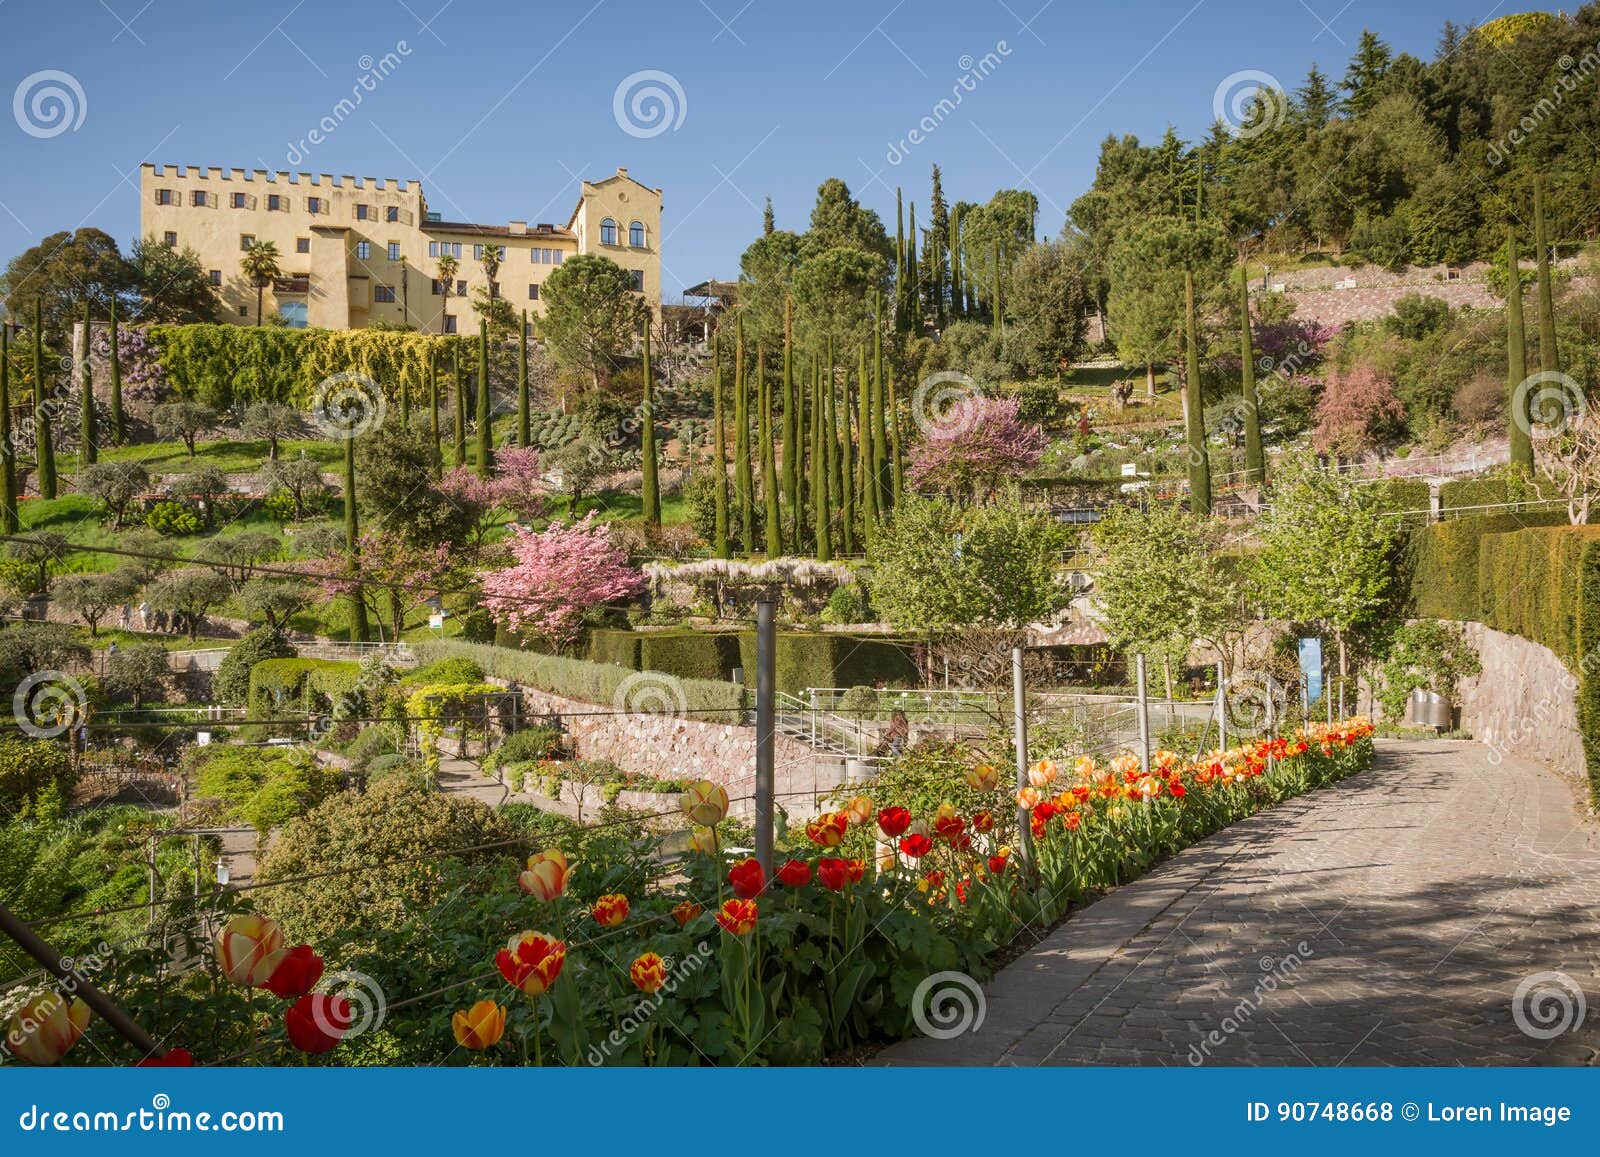 The Botanic Gardens Of Trauttmansdorff Castle Merano South Tyrol